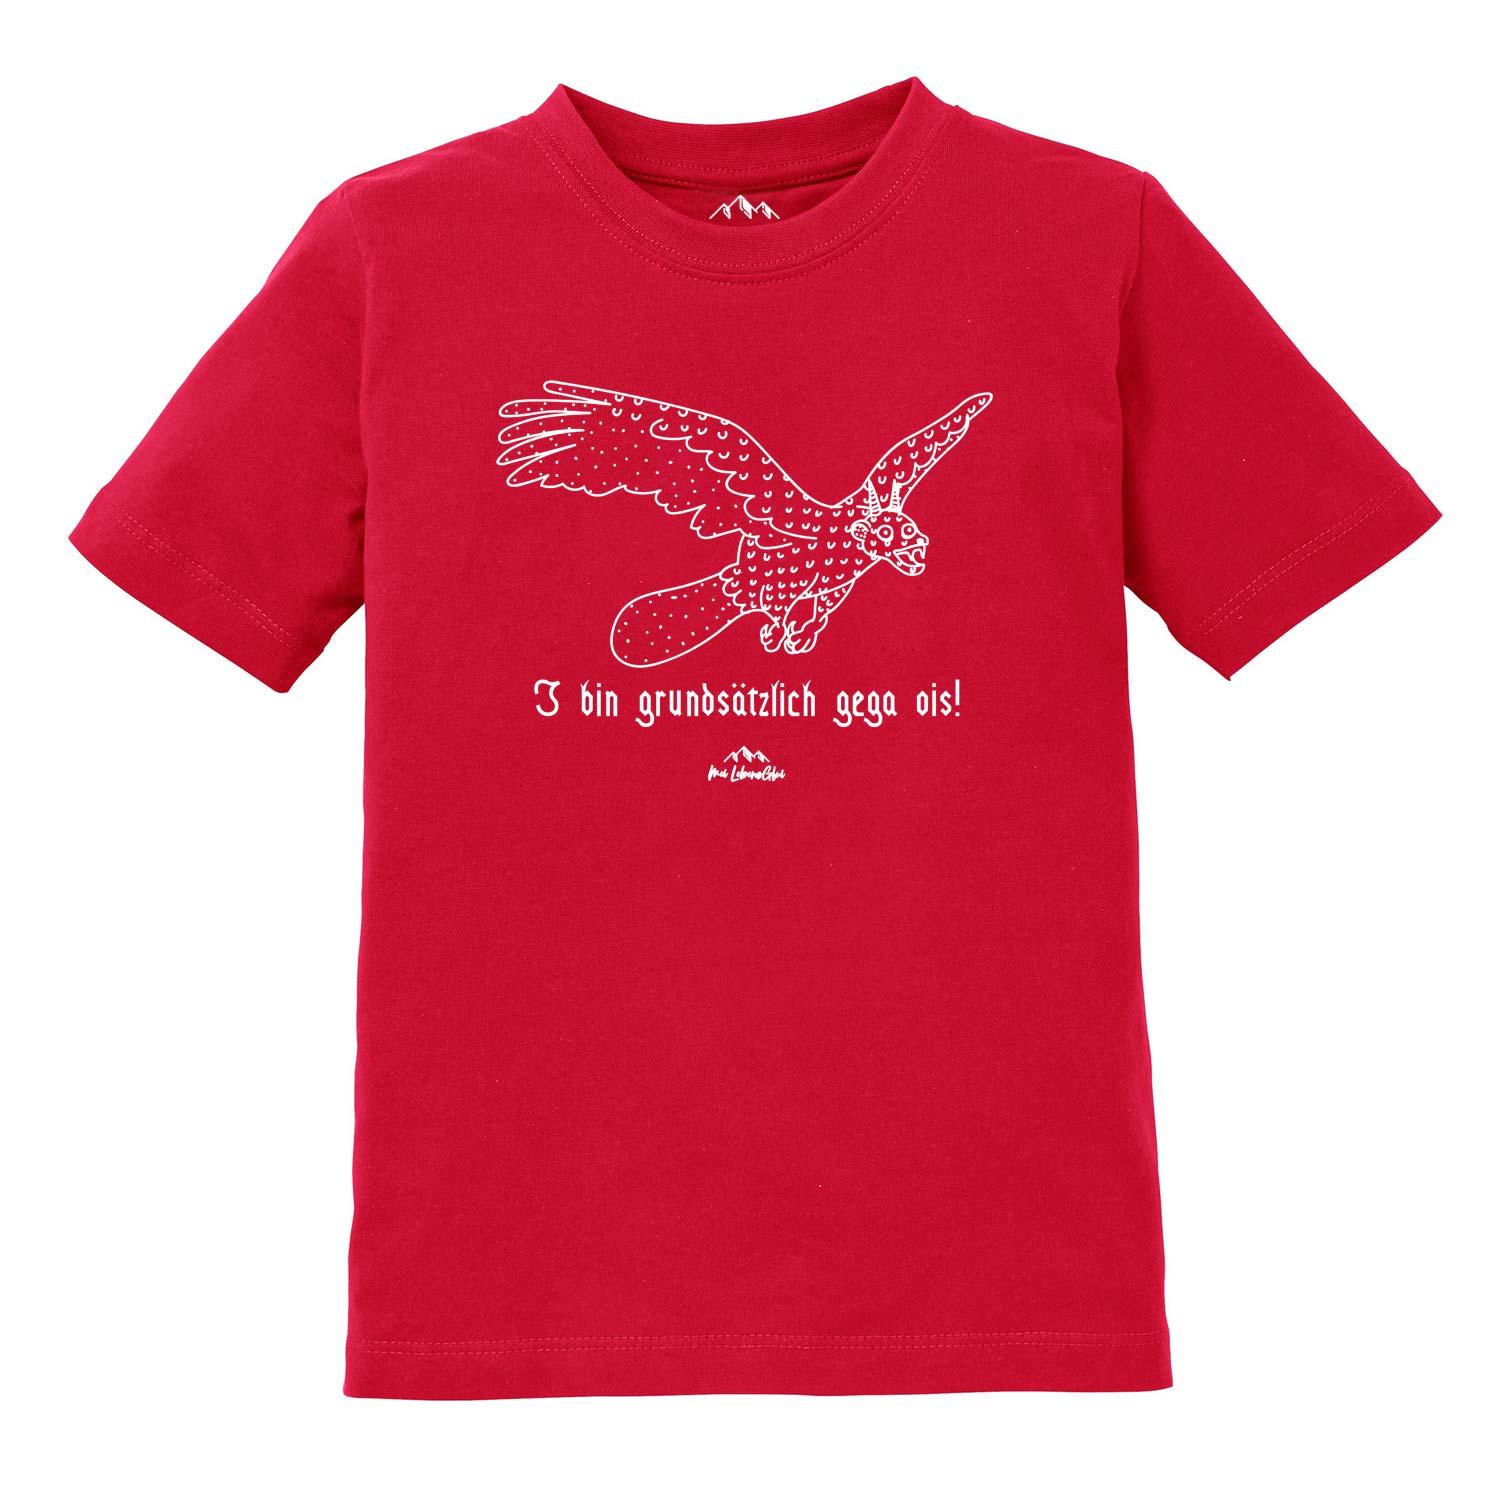 Kinder T-Shirt Wolpertinger "Gega ois" - bavariashop - mei LebensGfui